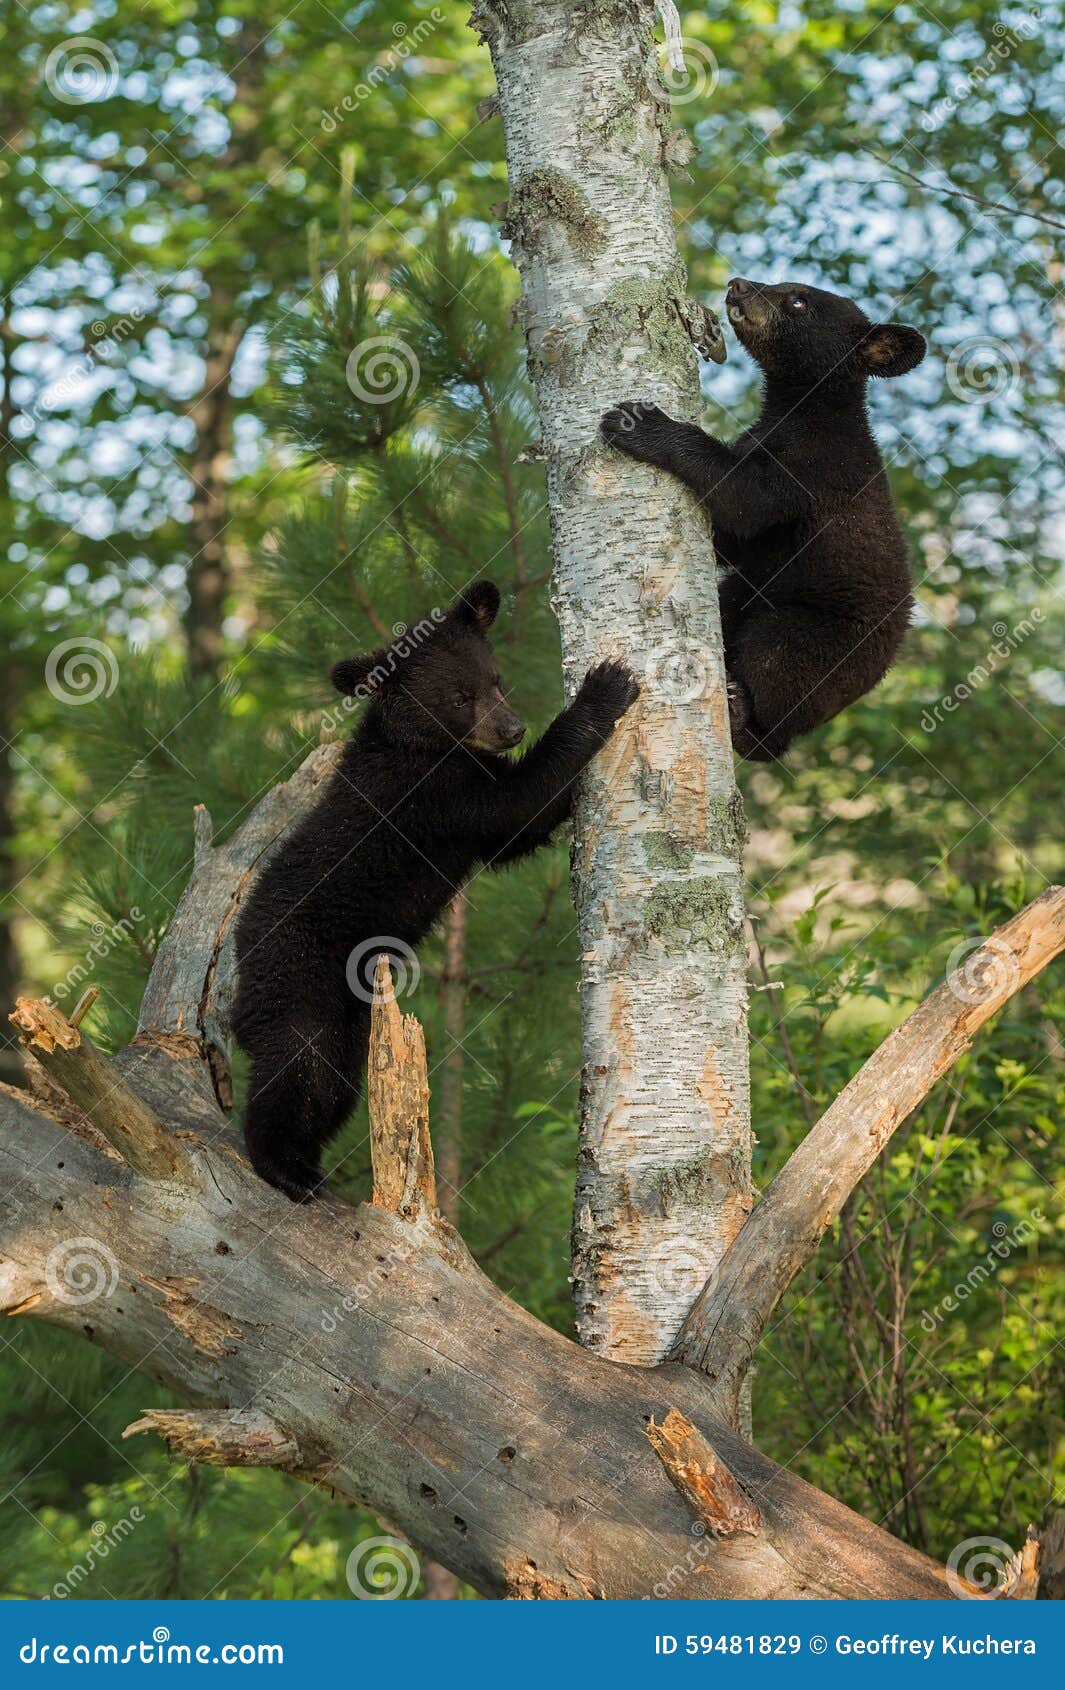 3,540 Animals Climb Tree Stock Photos - Free & Royalty-Free Stock Photos  from Dreamstime